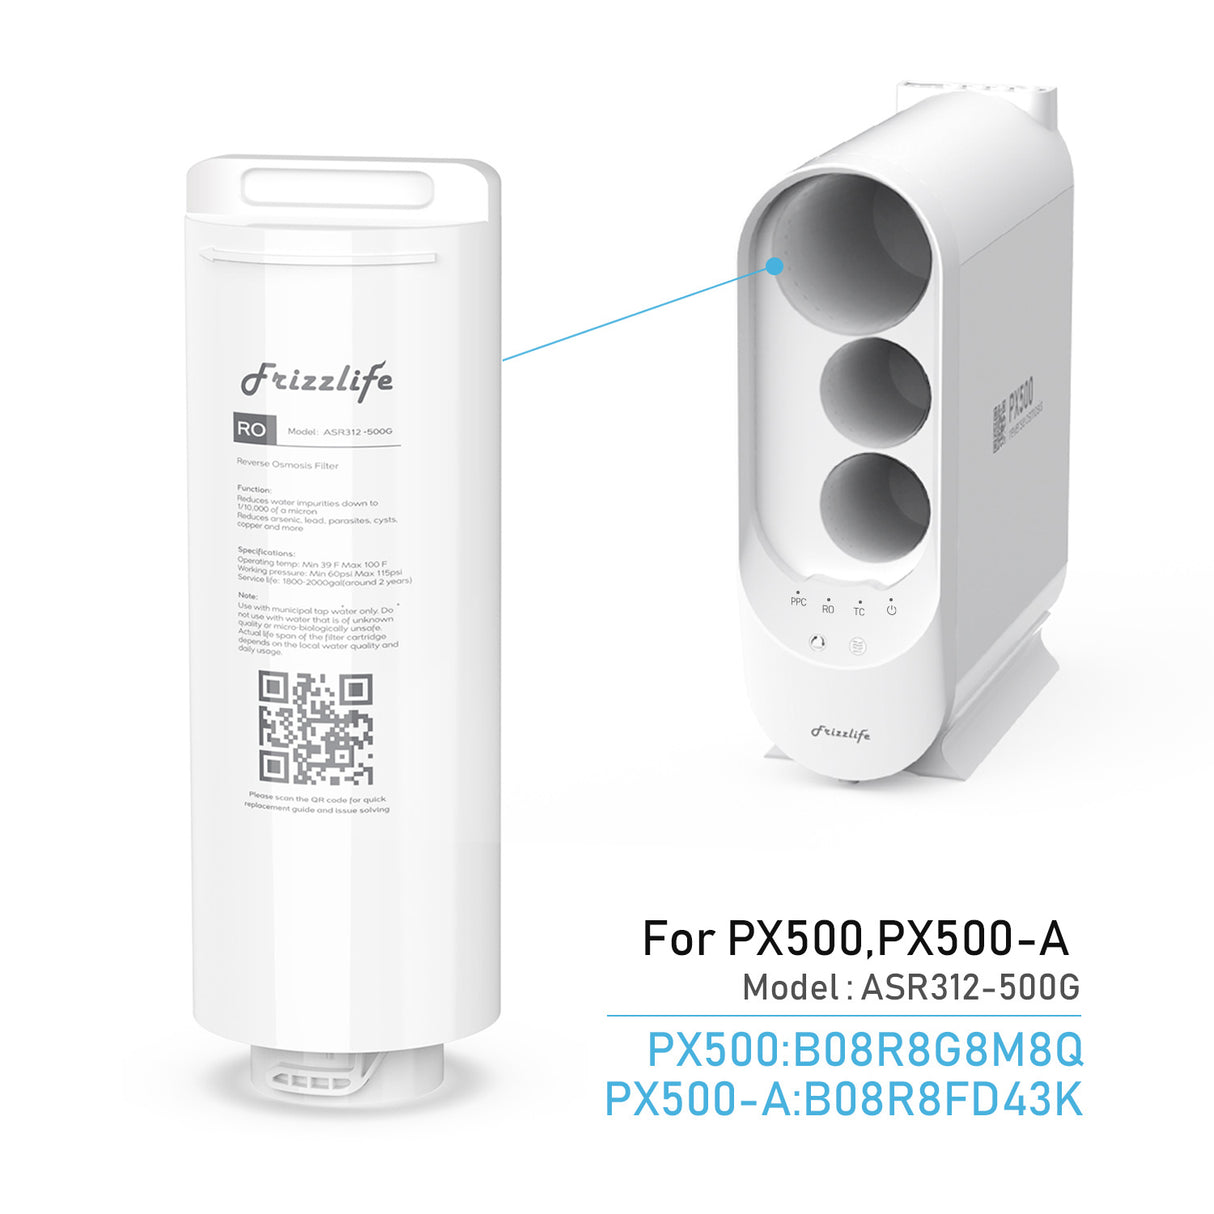 FRIZZLIFE ASR312-500G RO Cartucho de filtro de repuesto para PX500, PX500-A (2da etapa) 